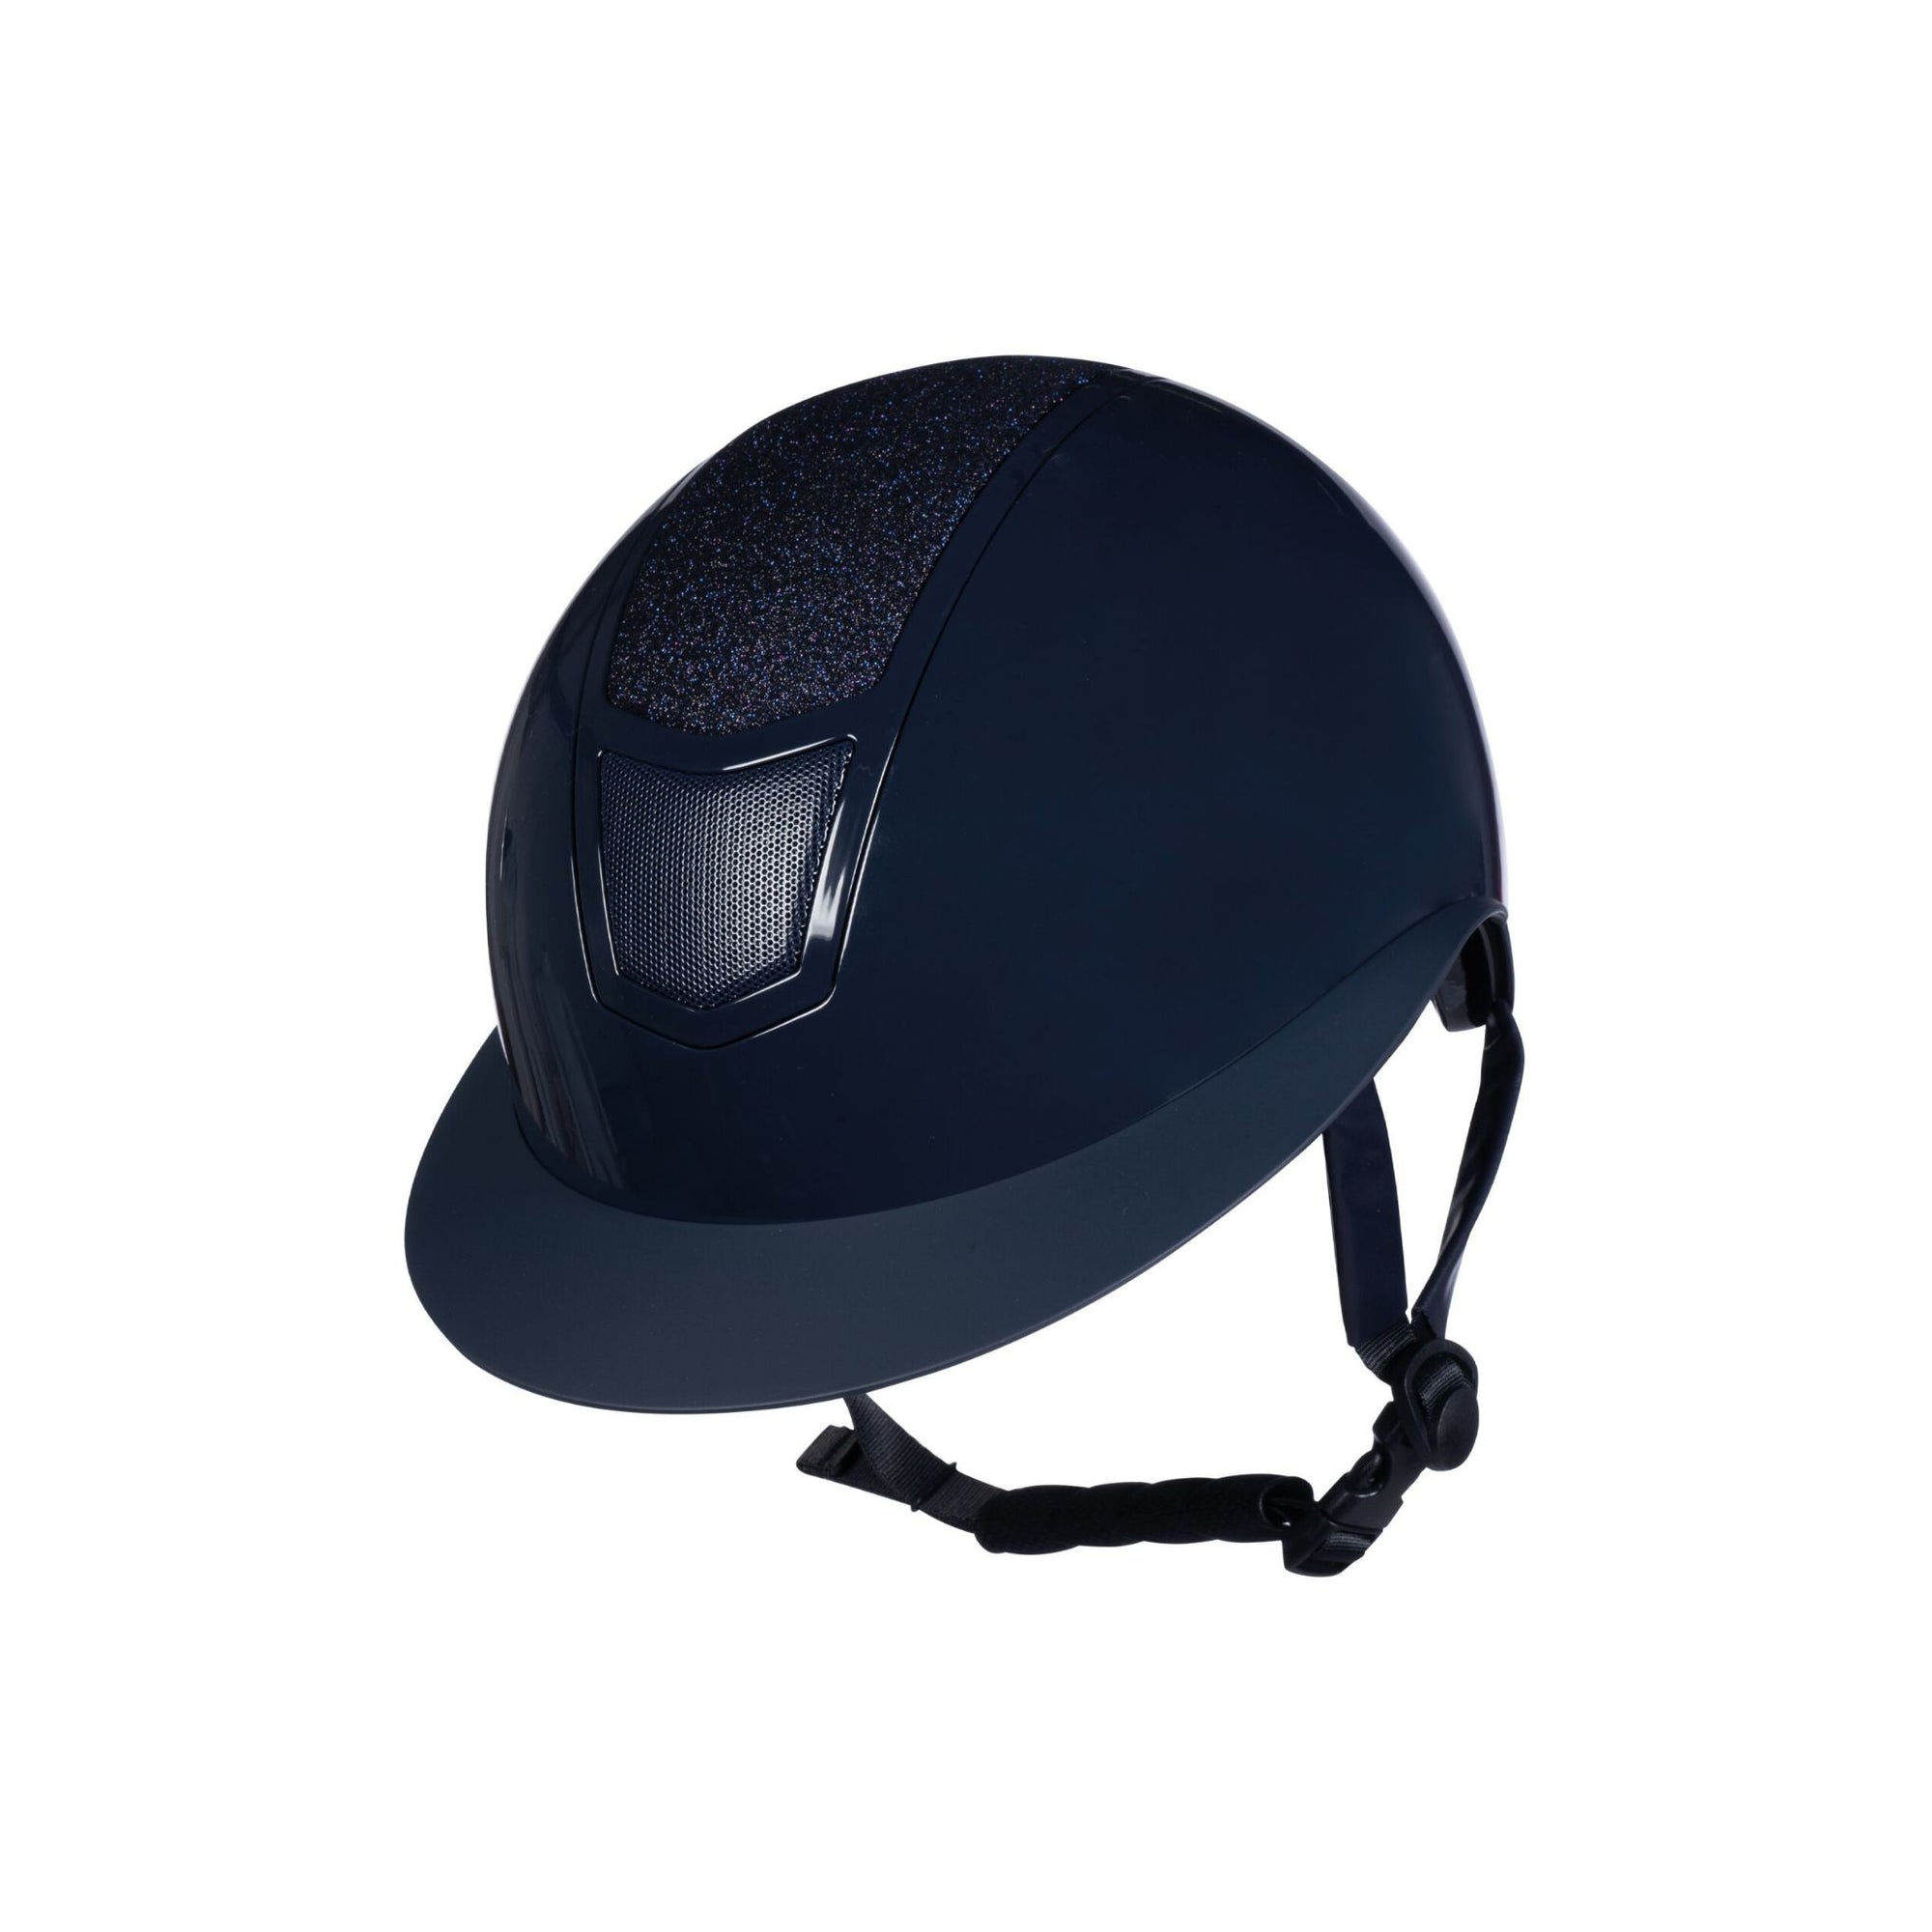 Black shiny helmet with black glitter and a wide visor